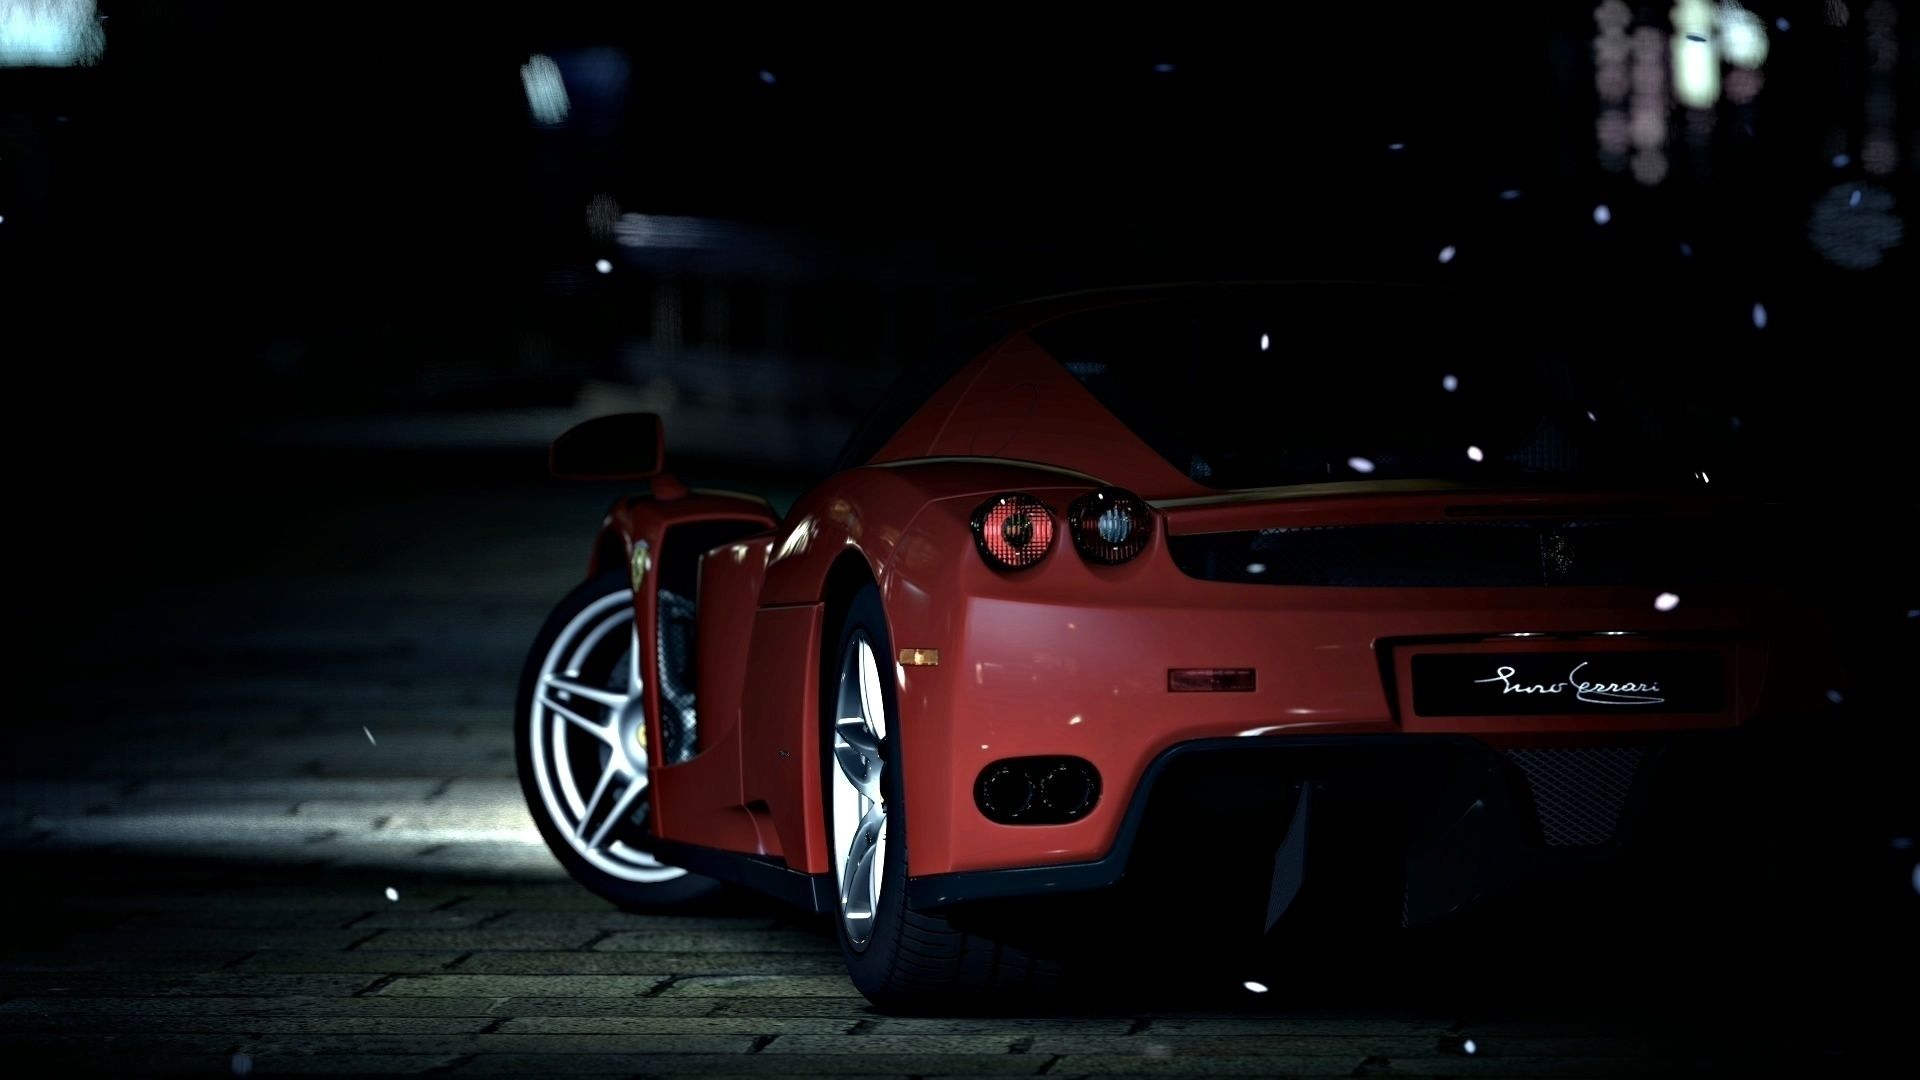 Red Ferrari Car Rear View at Night HD Desktop Wallpaper Background download